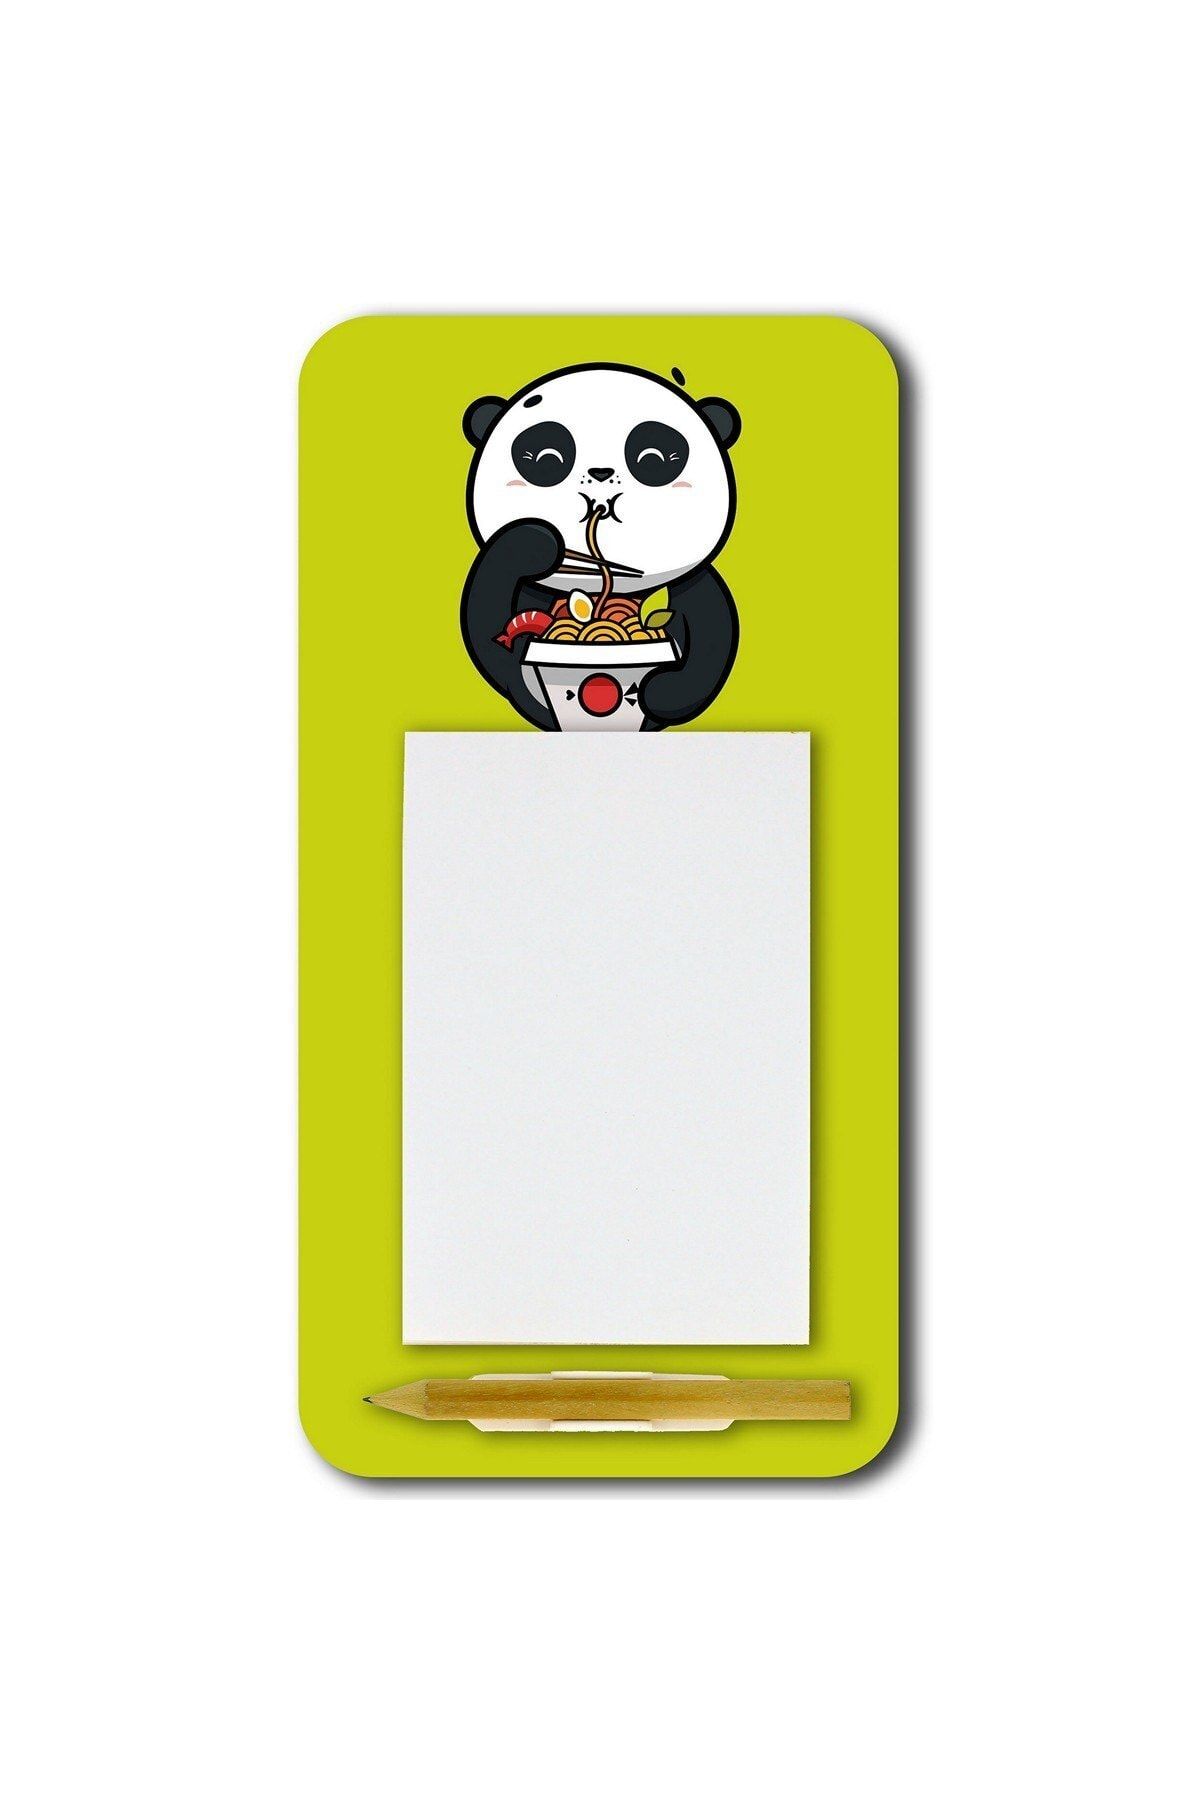 WuW Noodle Yiyen Panda Magnetli Kalemli Notluk Buzdolabı Magneti